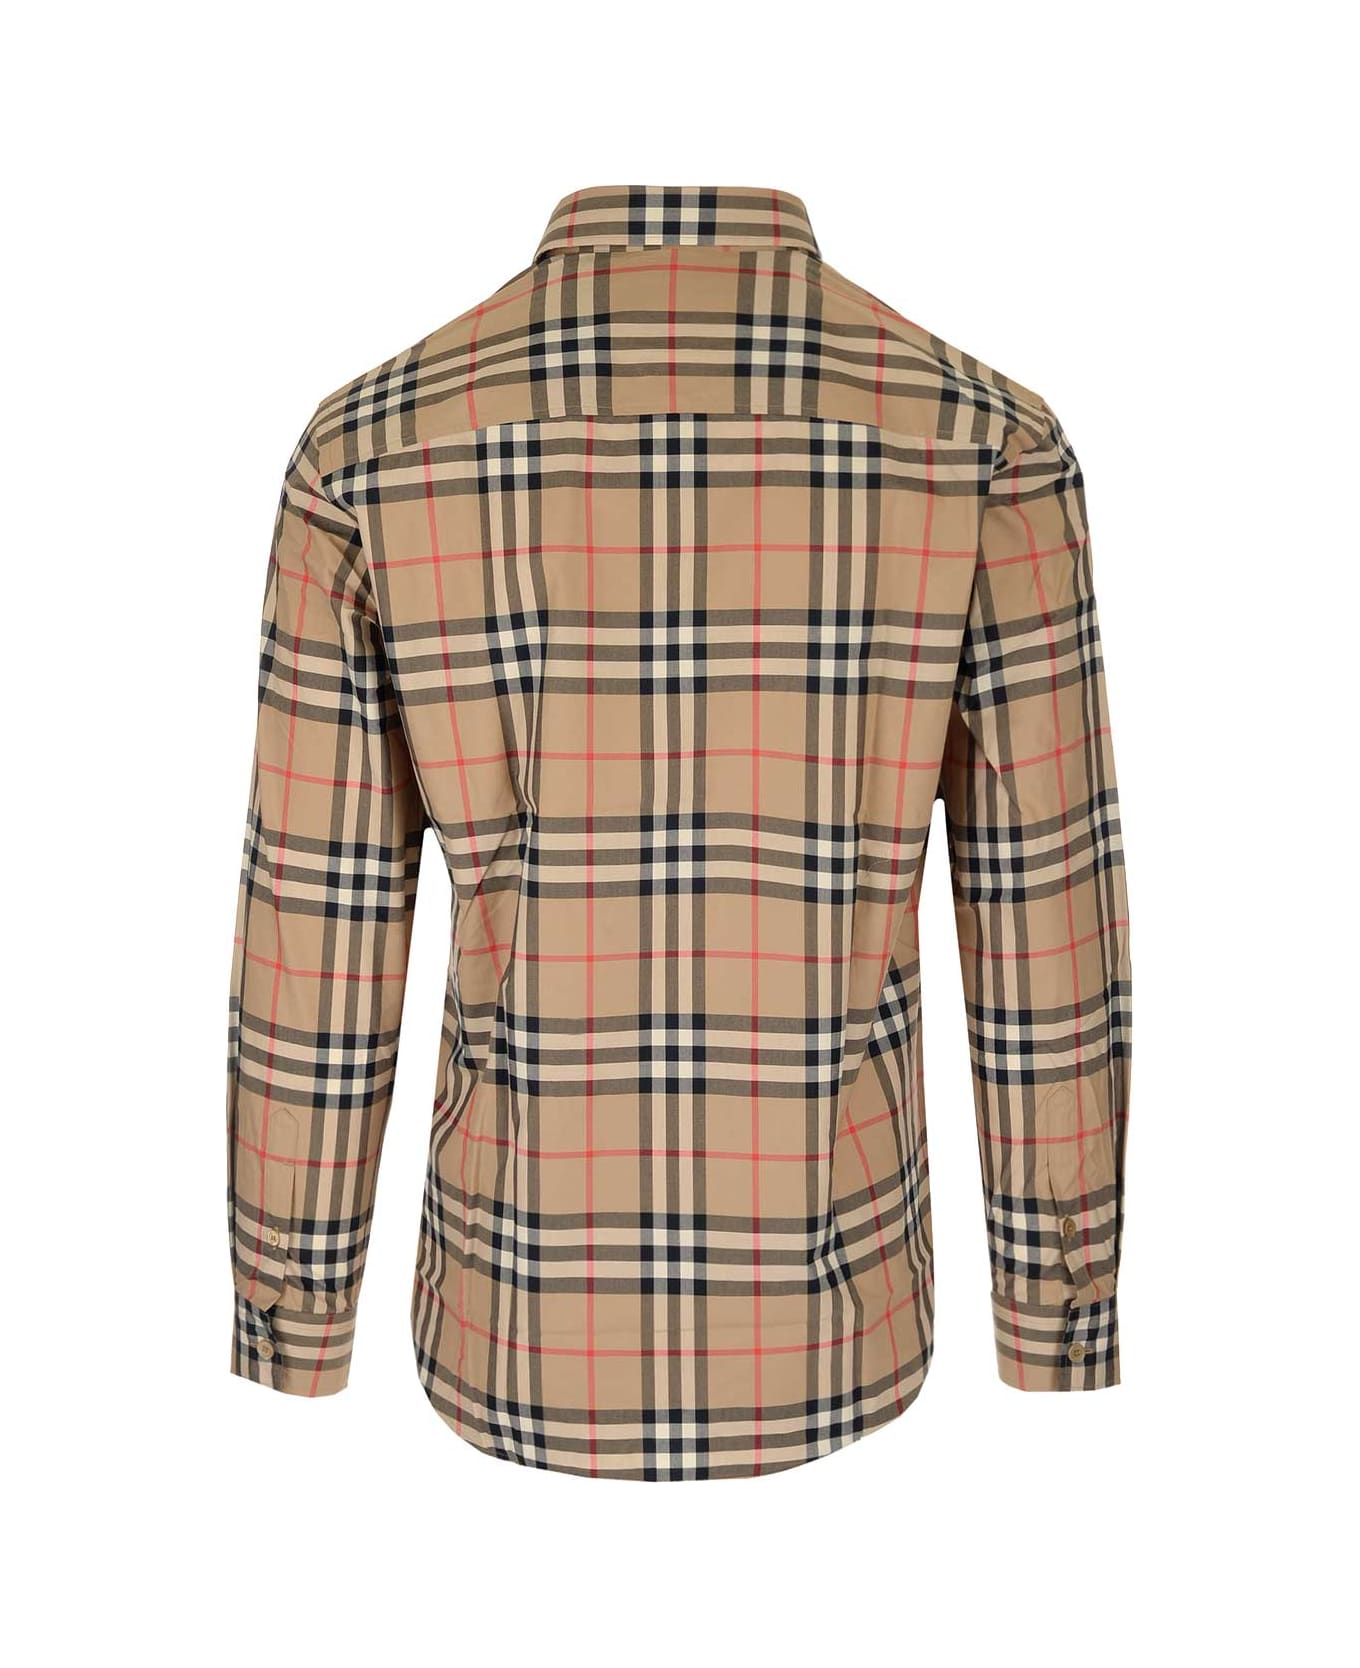 Burberry 'vintage Check' Shirt - Beige